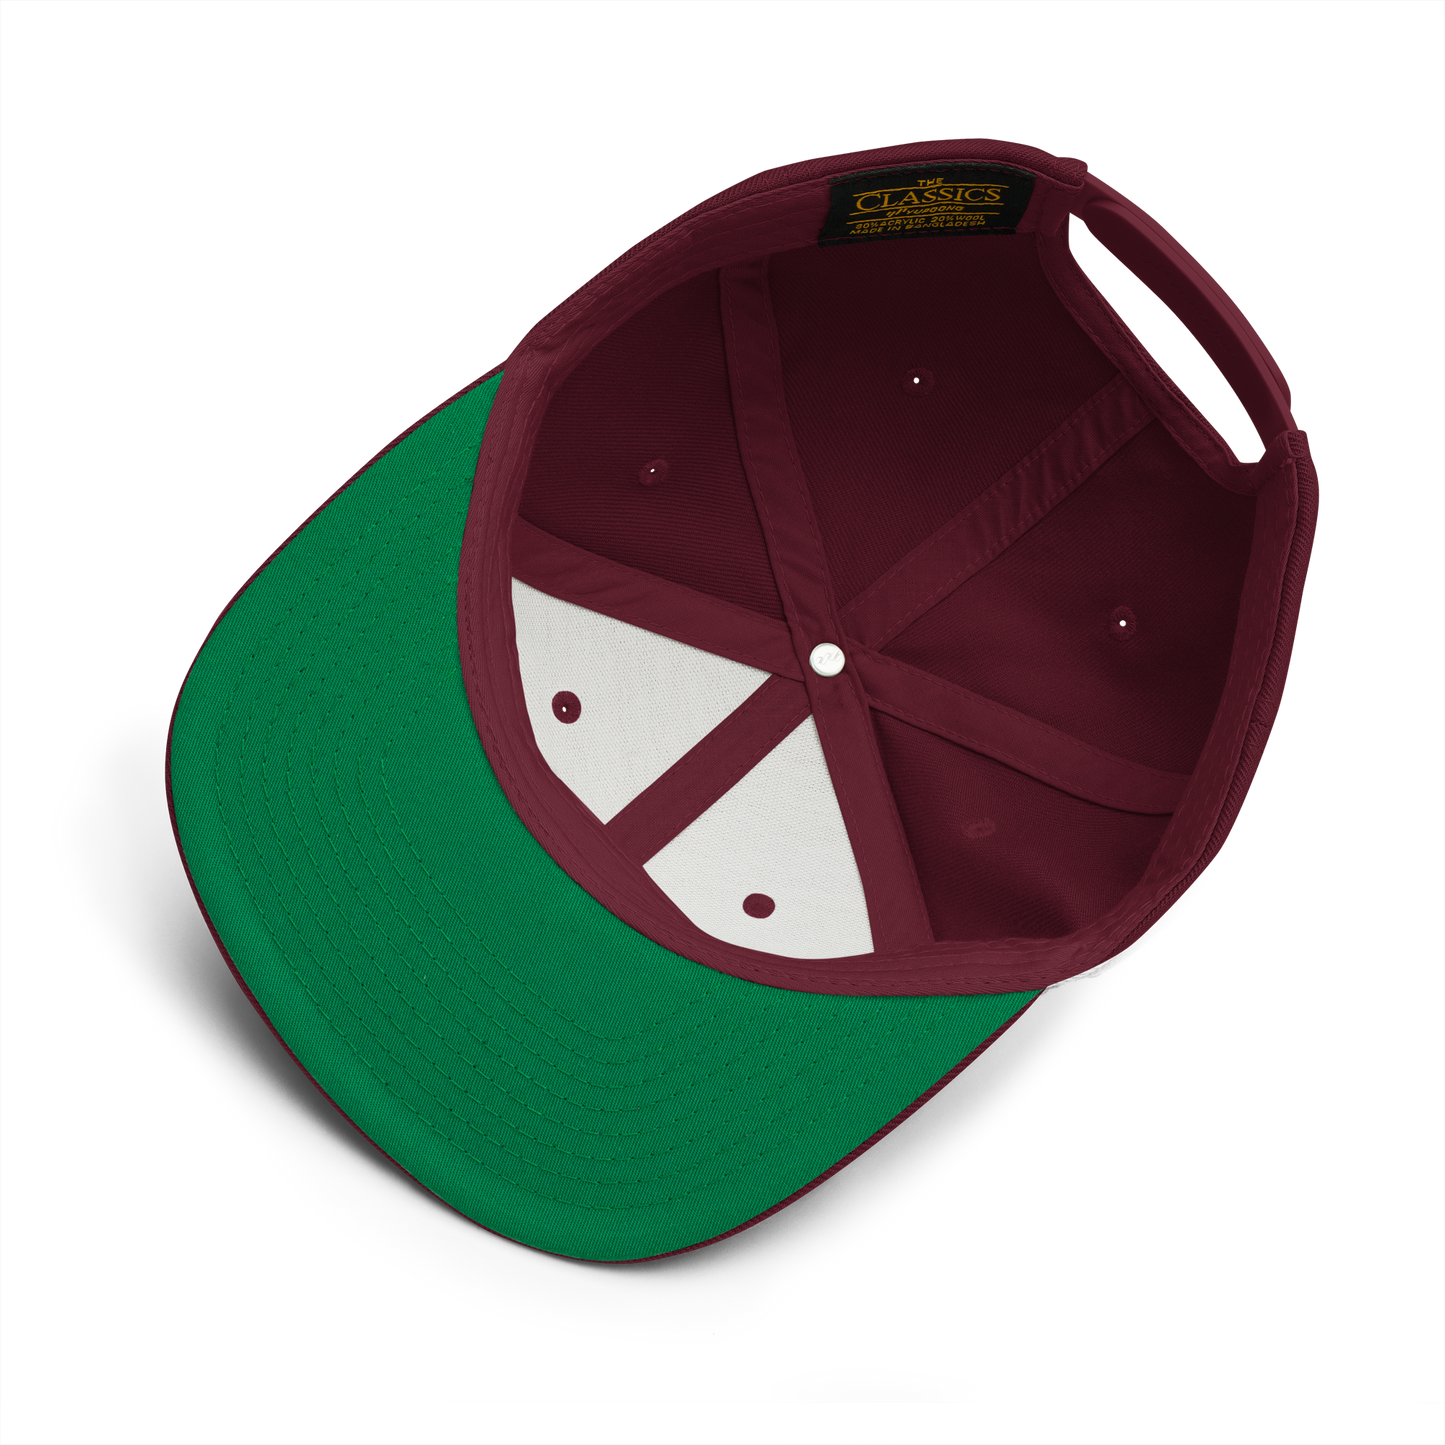 "Hibiscus" Maroon Snapback Hat